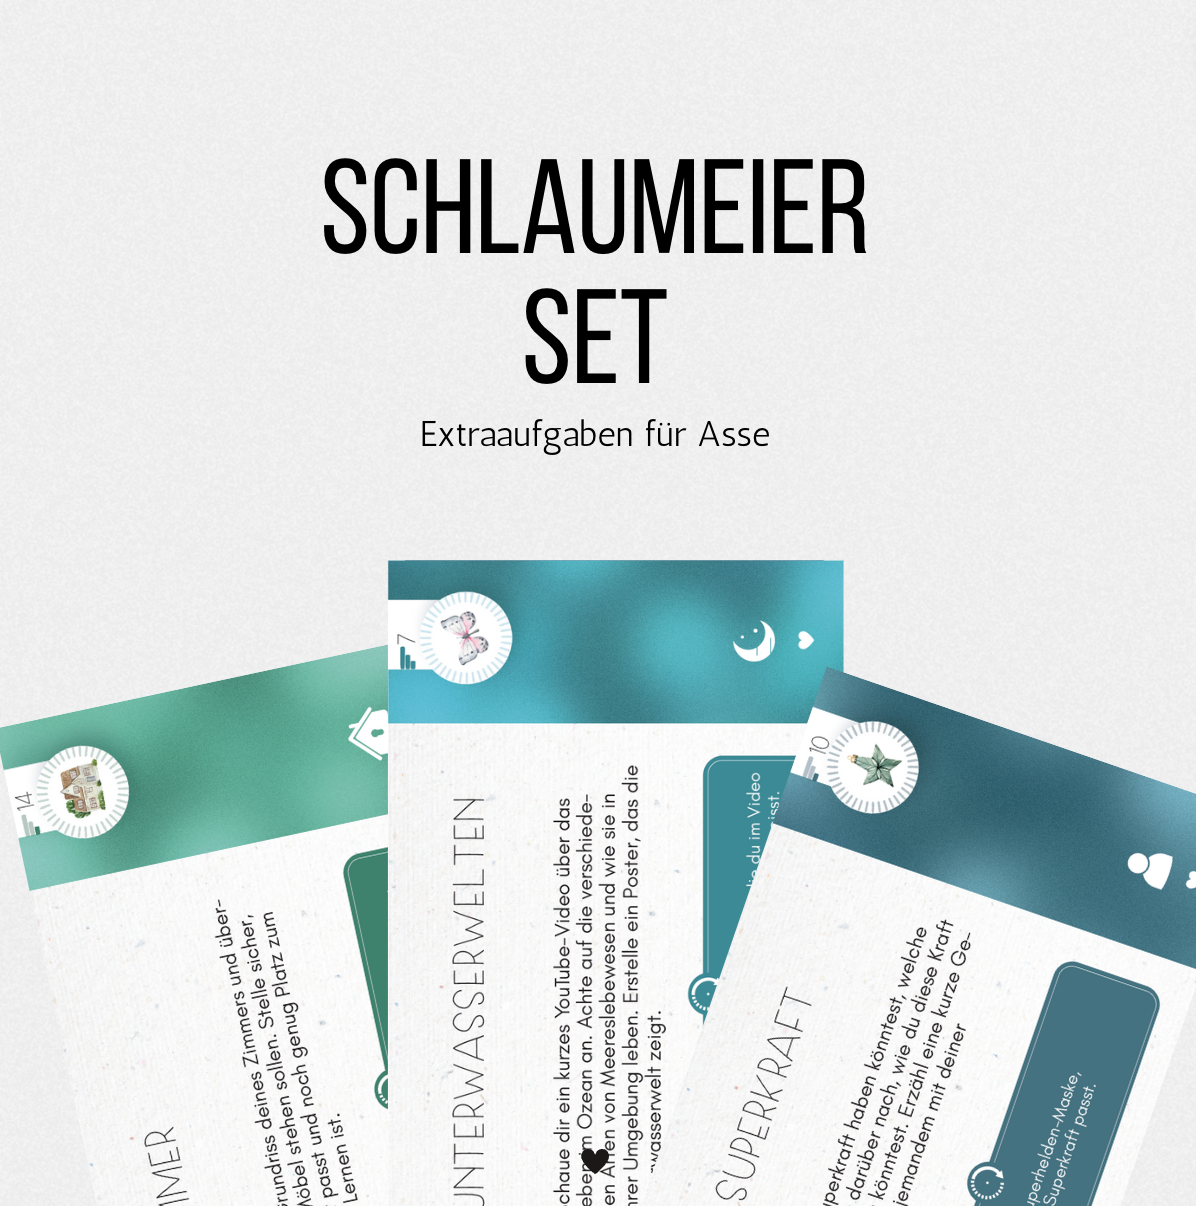 Schlaumeier-Set | Extraaufgaben für Asse